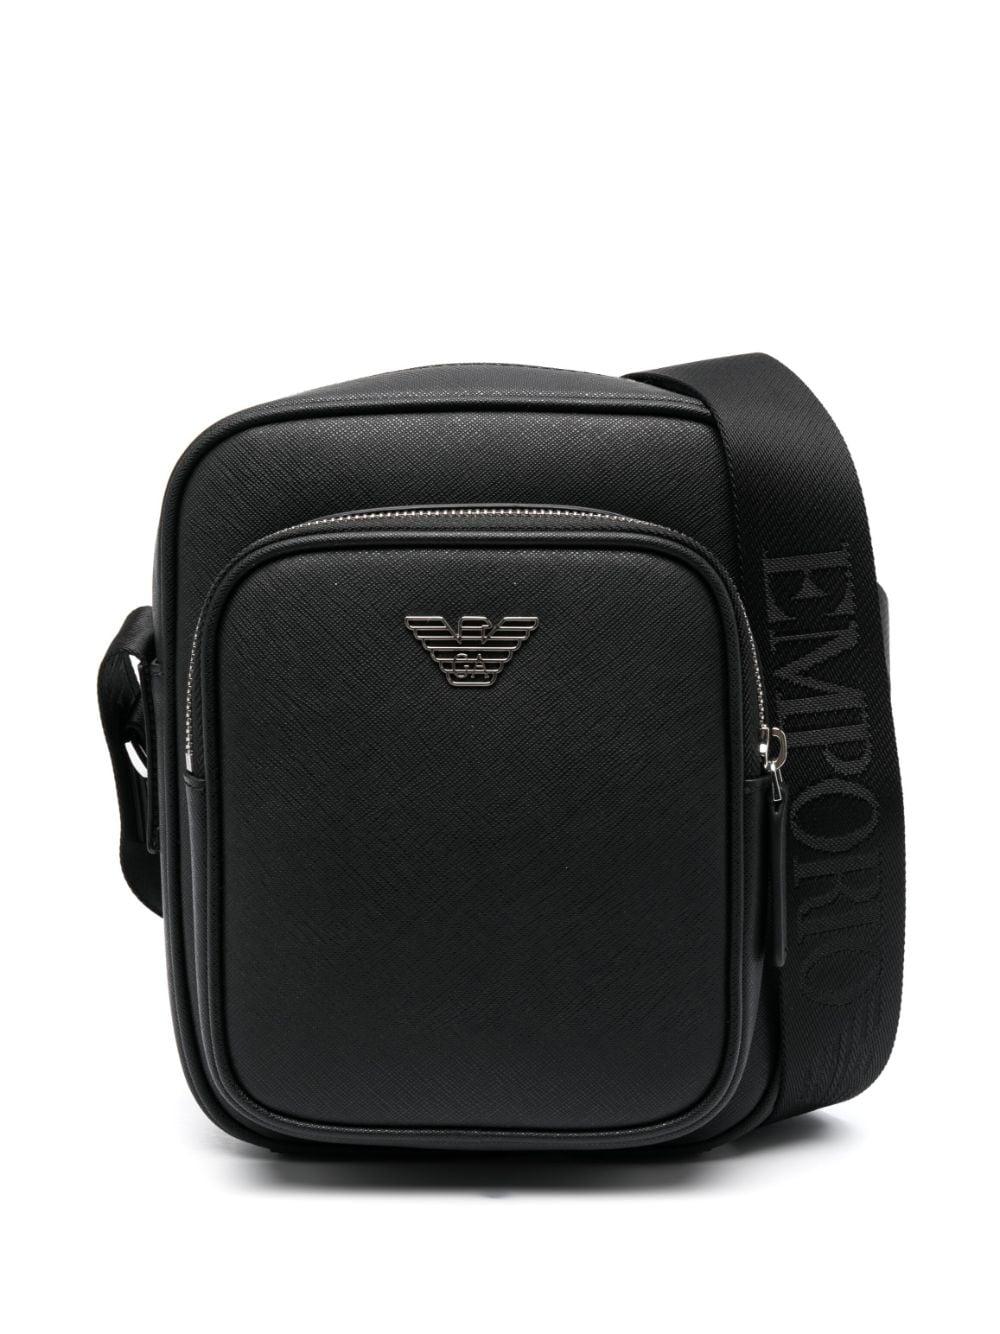 Emporio Armani Logo Messenger Bag Black